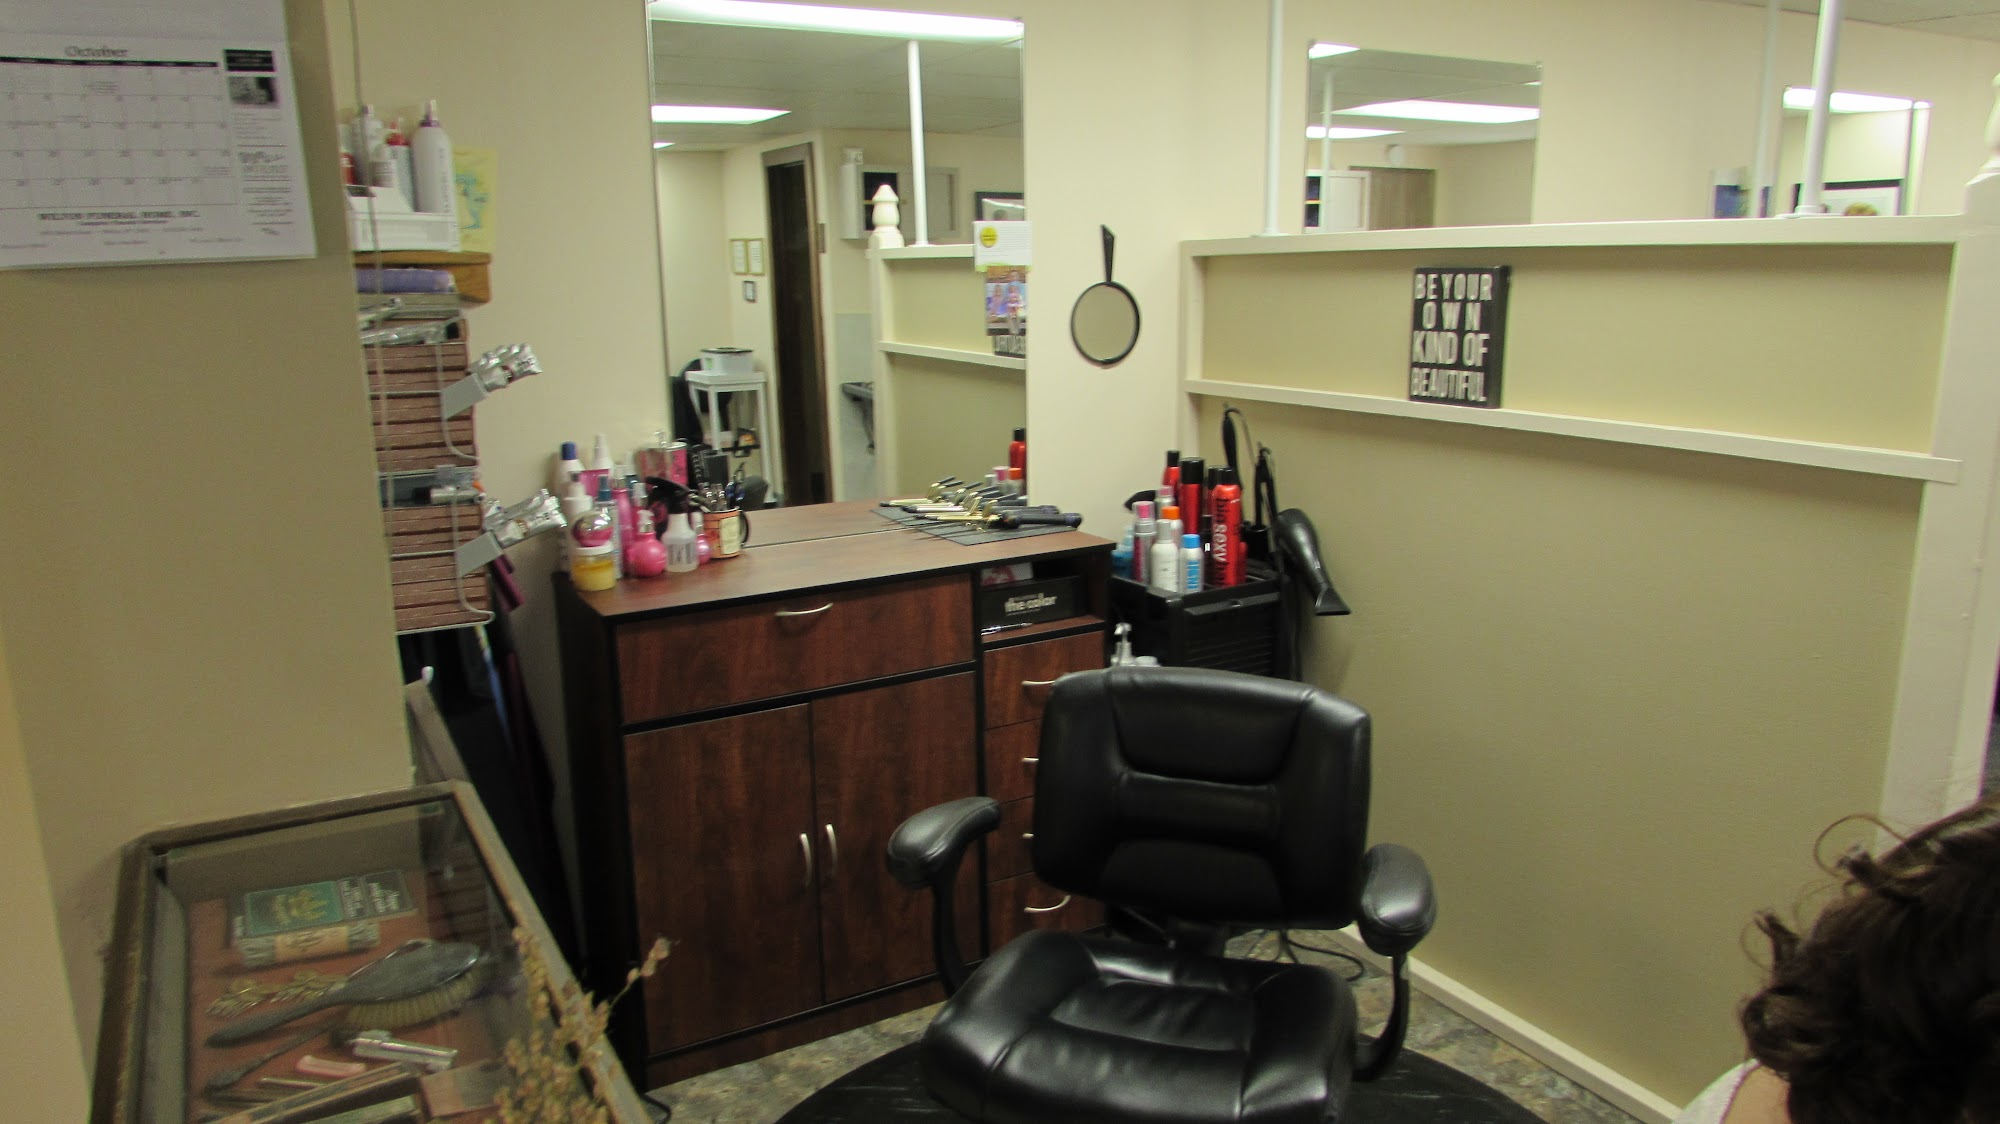 The Final Touch Hair Salon 656 US-9, Gansevoort New York 12831